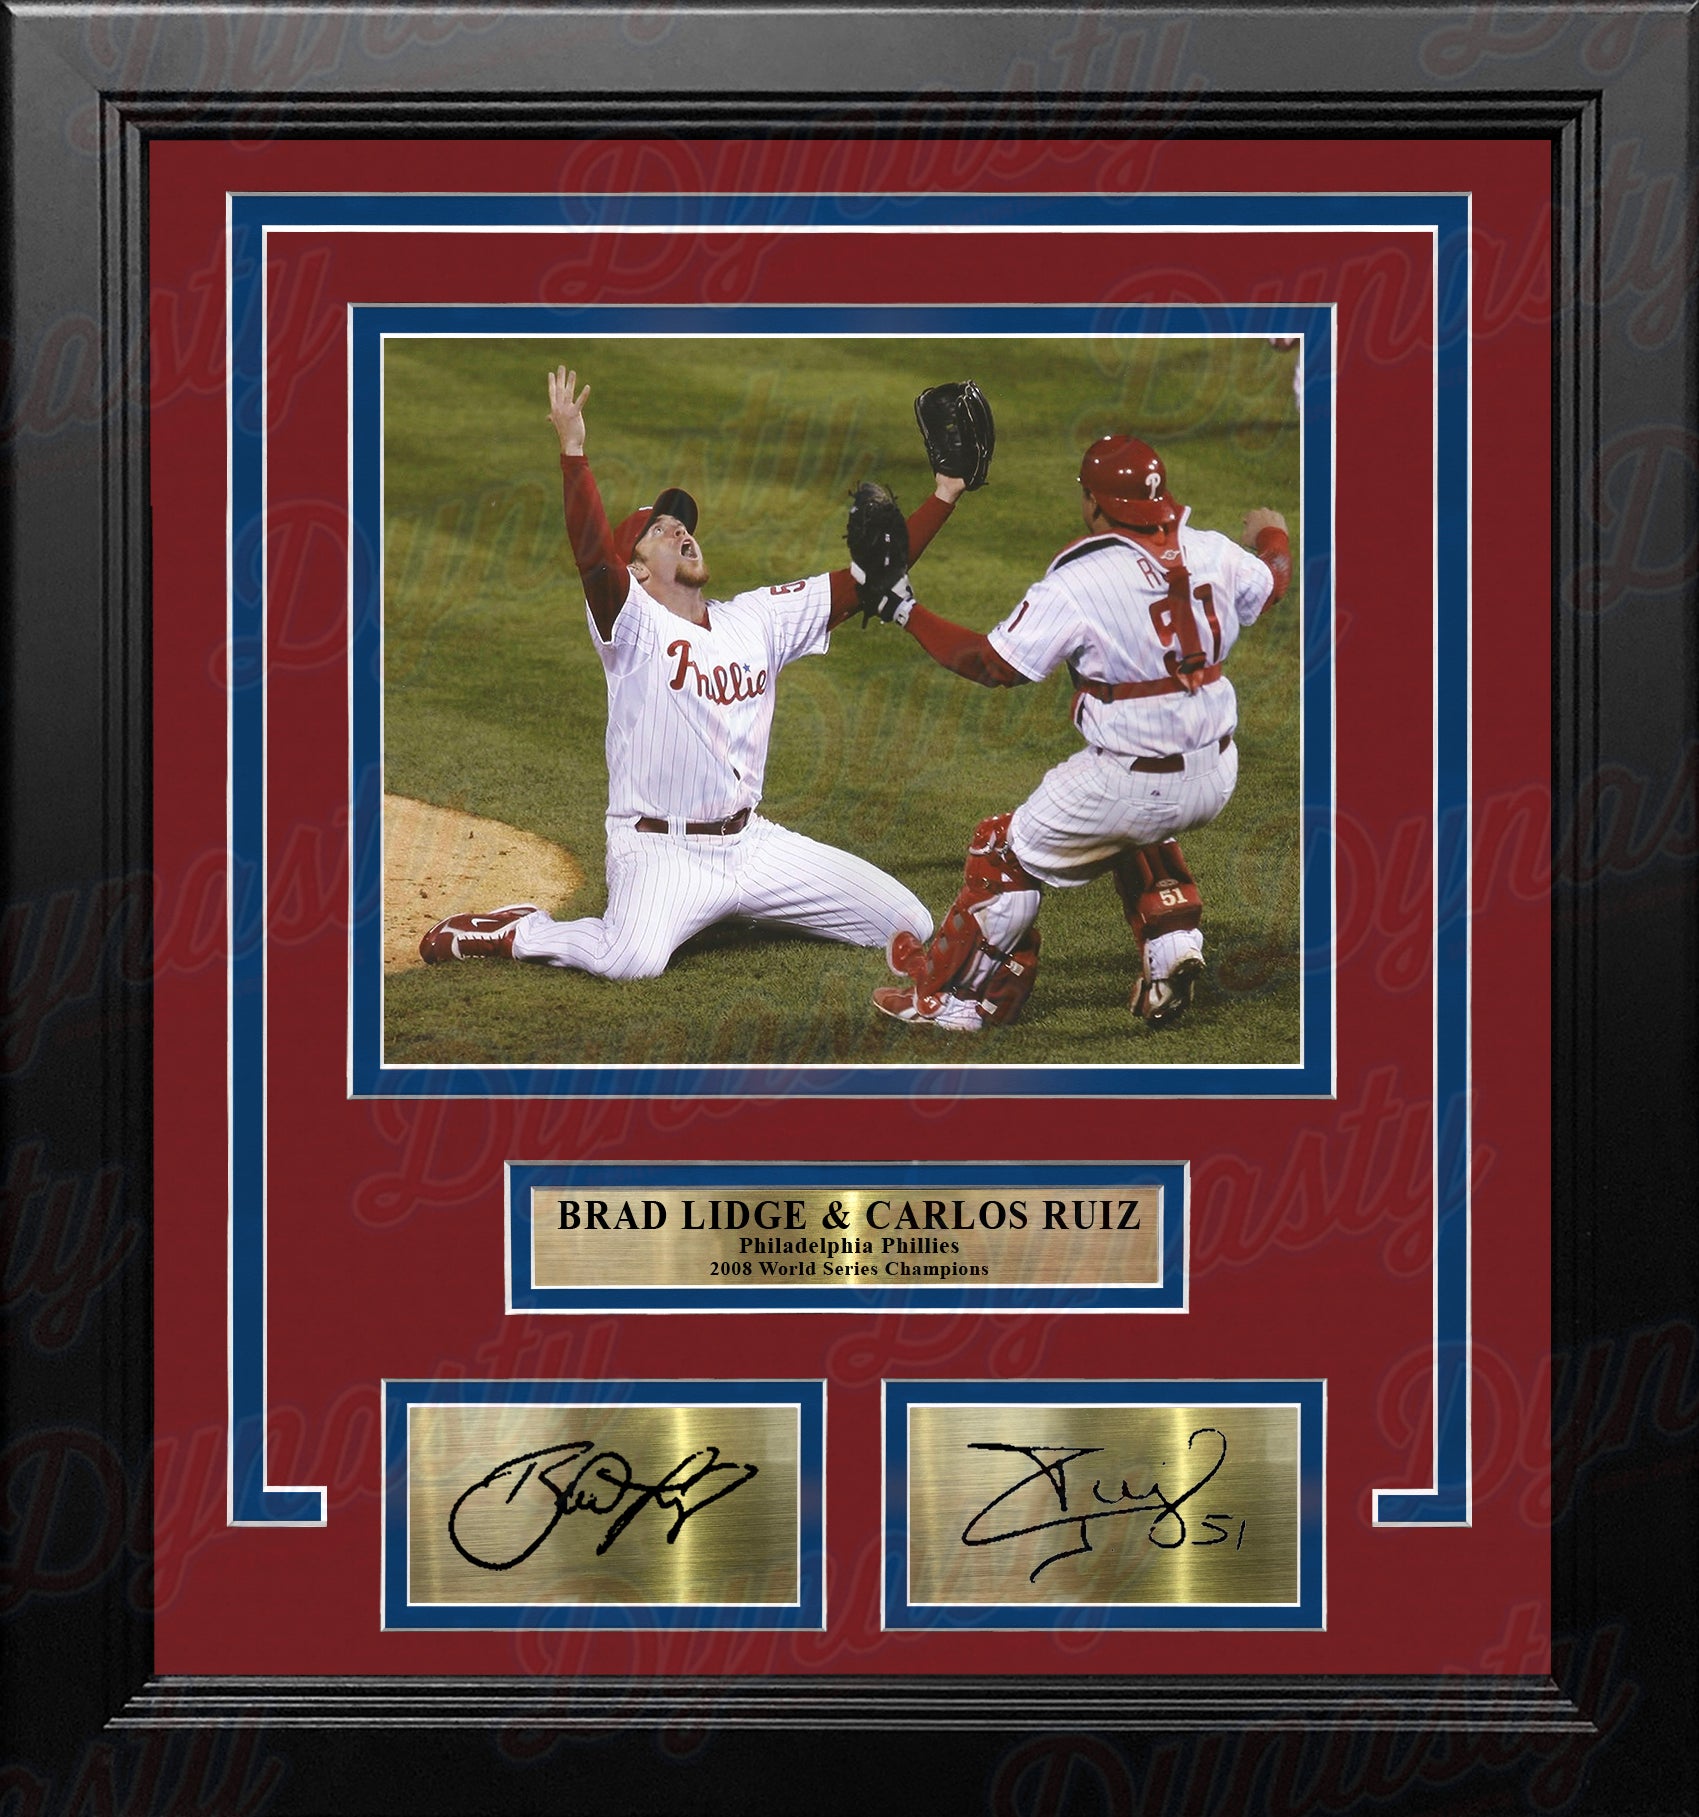 Brad Lidge & Carlos Ruiz 2008 World Series Last Out Celebration  Philadelphia Phillies Framed Baseball Photo with Engraved Autographs